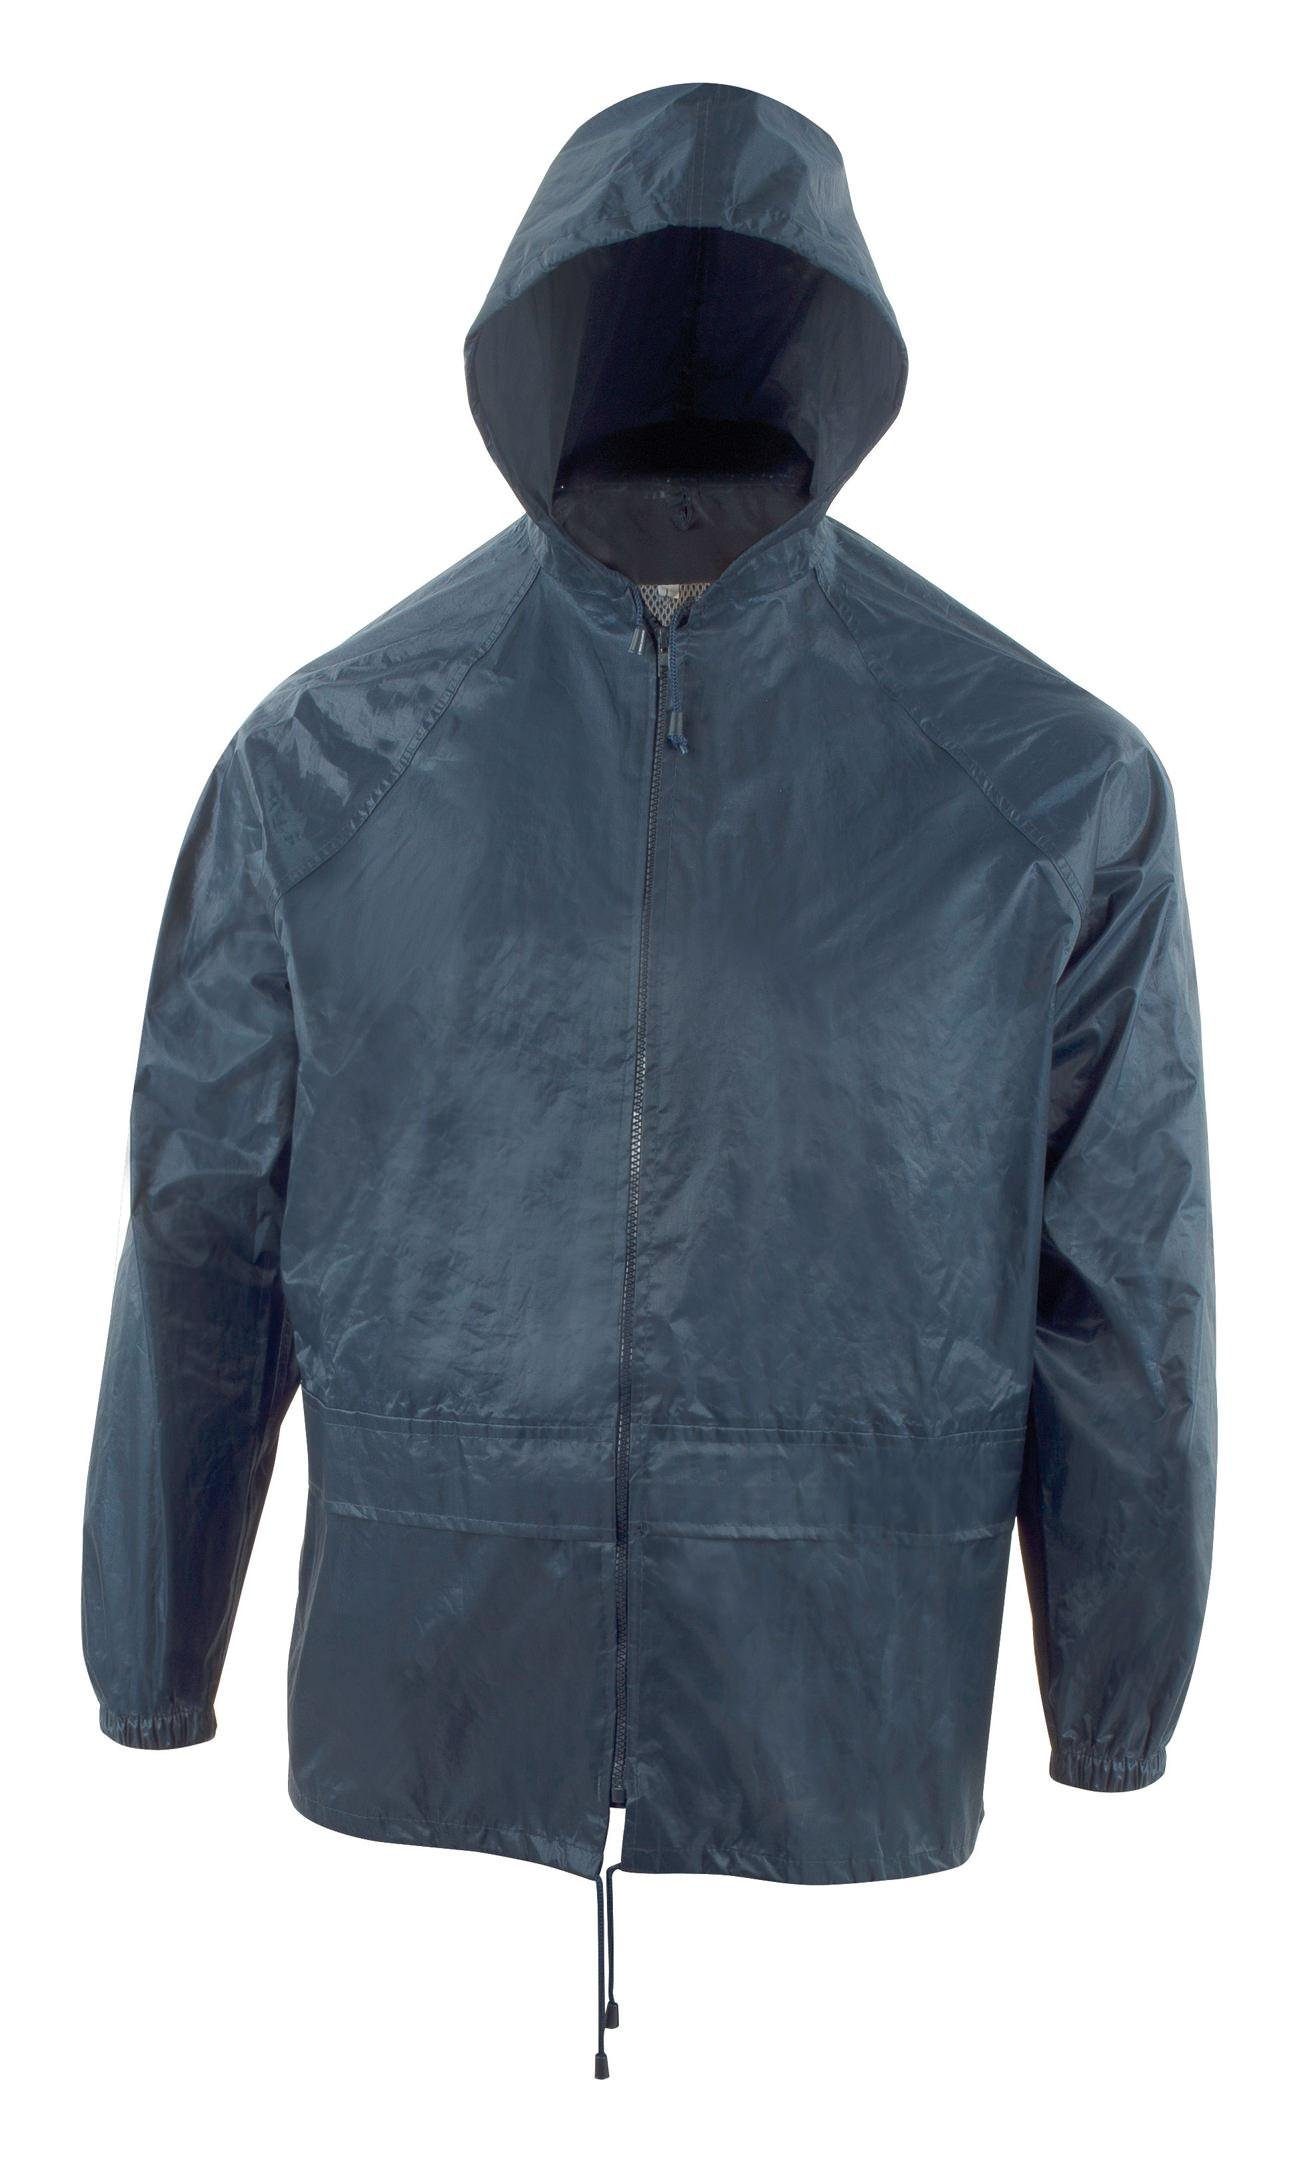 ASATEX Regenanzug, Regenset (Hose / Jacke) Größe L blau